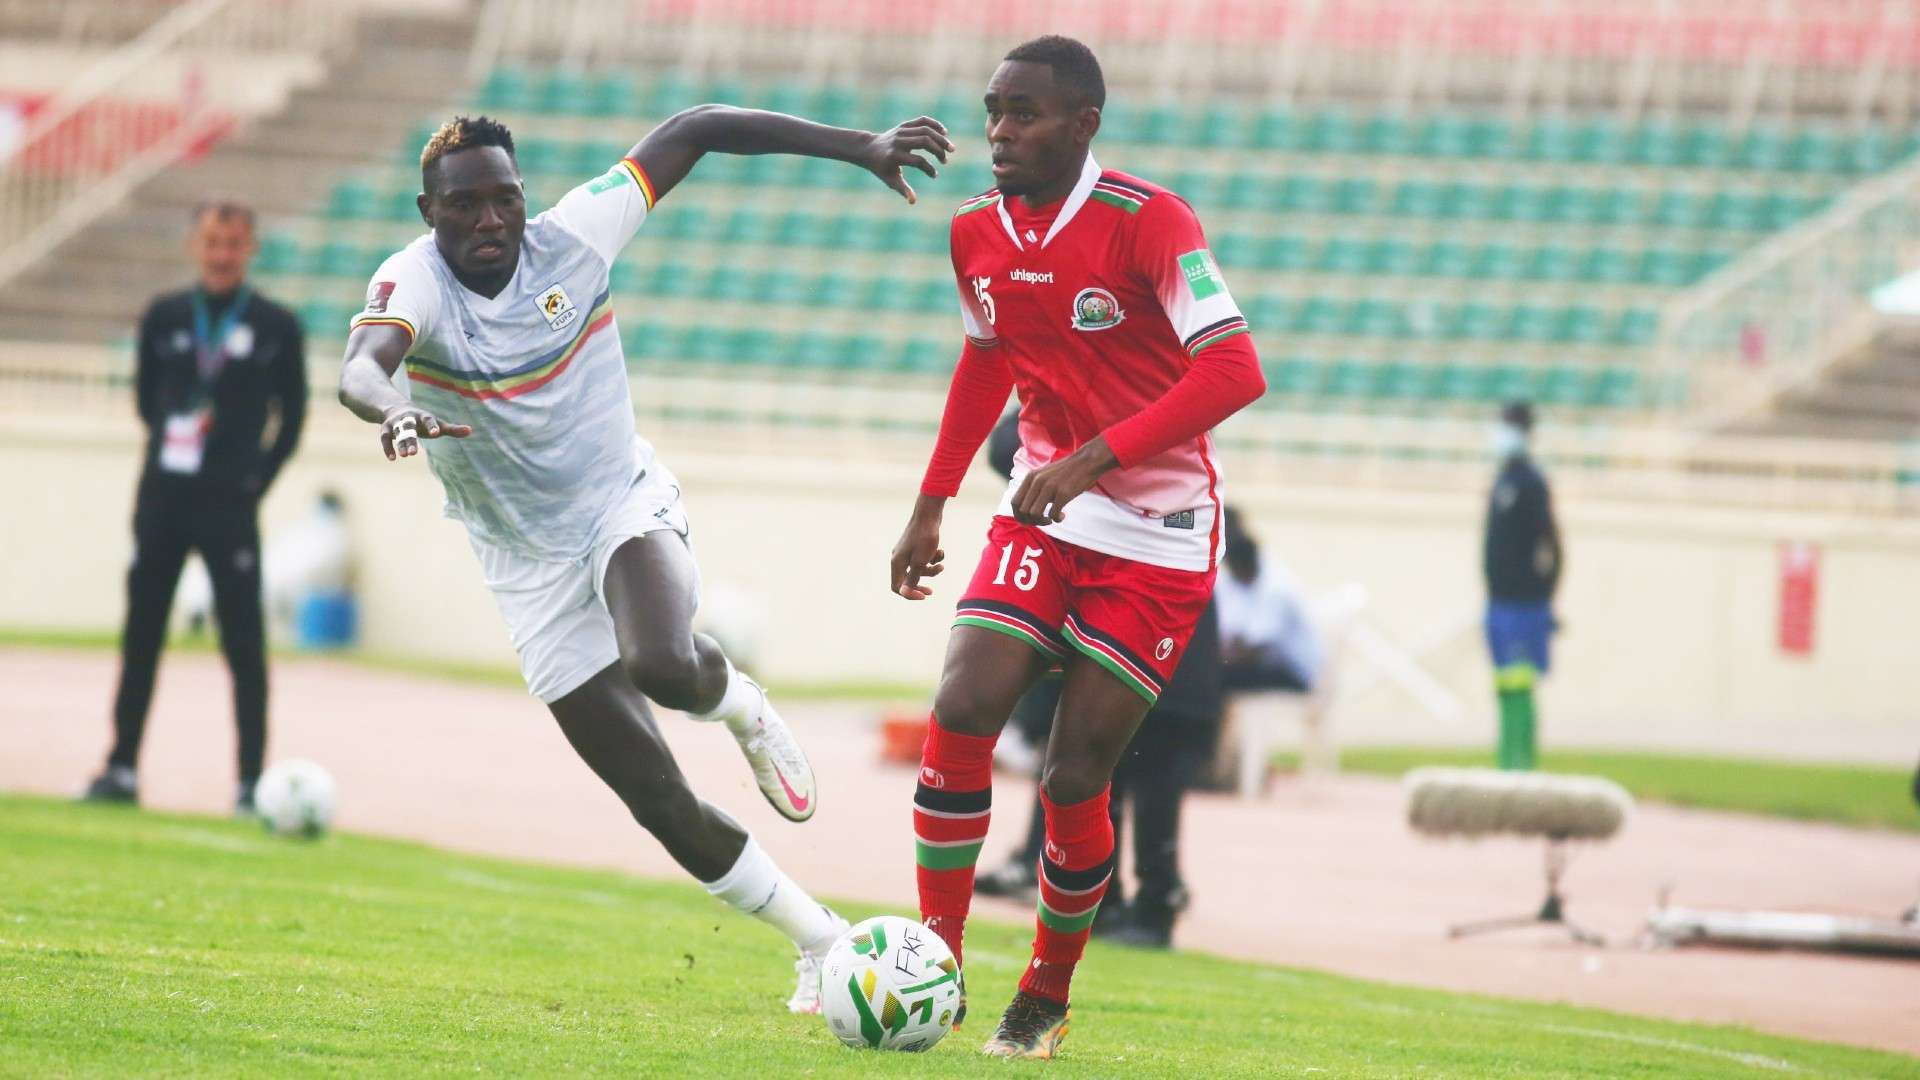 Daniel Sakari of Kenya and Harambee Stars vs Uganda.